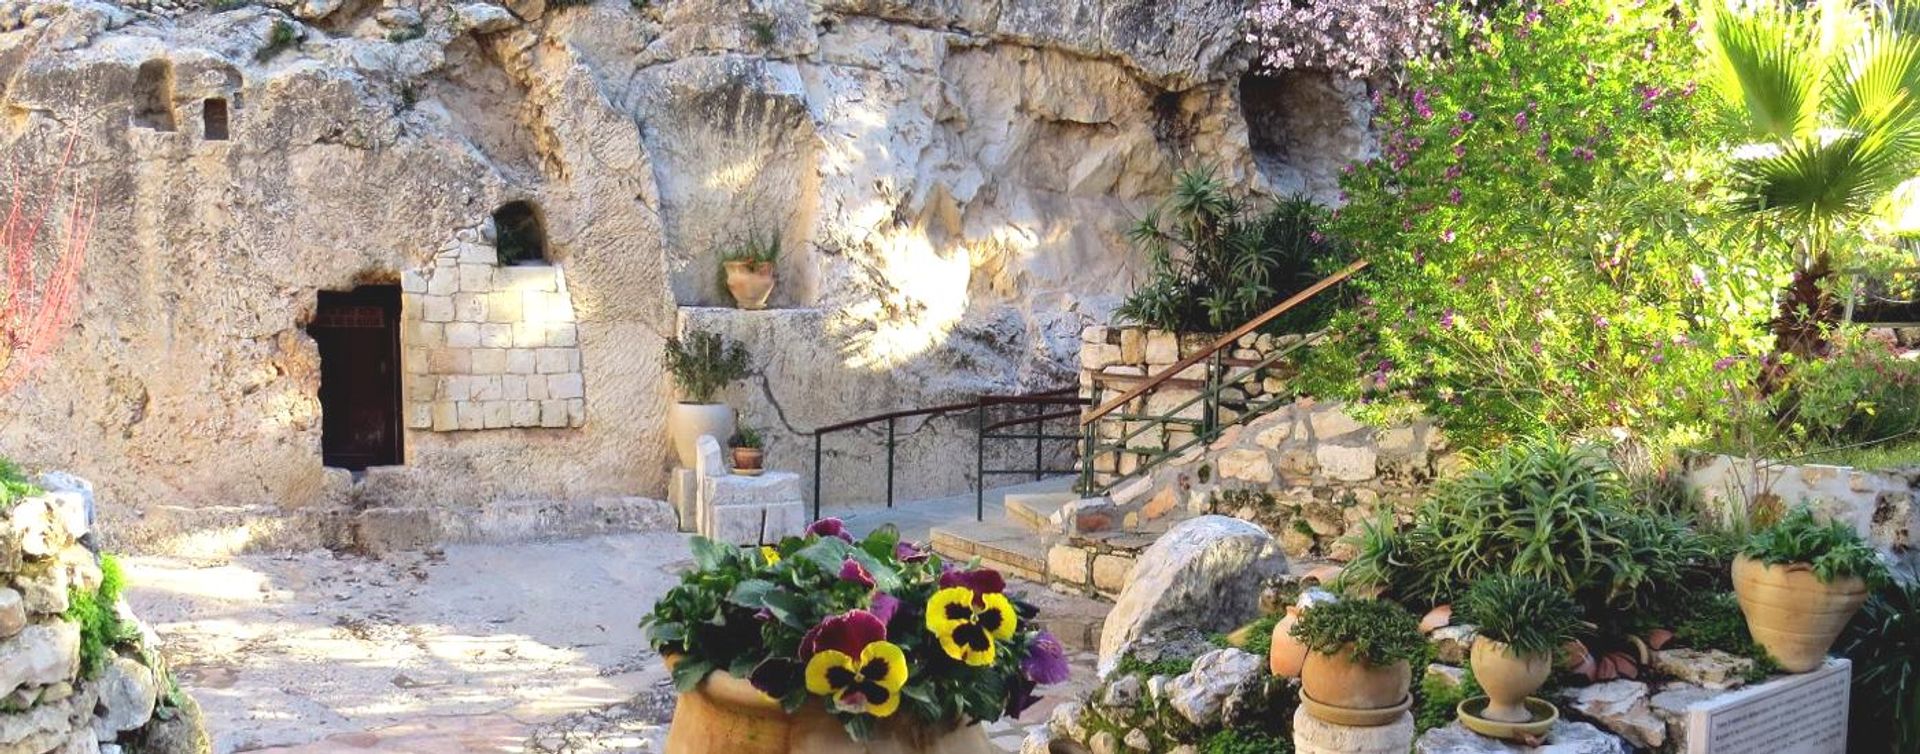 De graftombe en de bijbehorende tuin in Jeruzalem